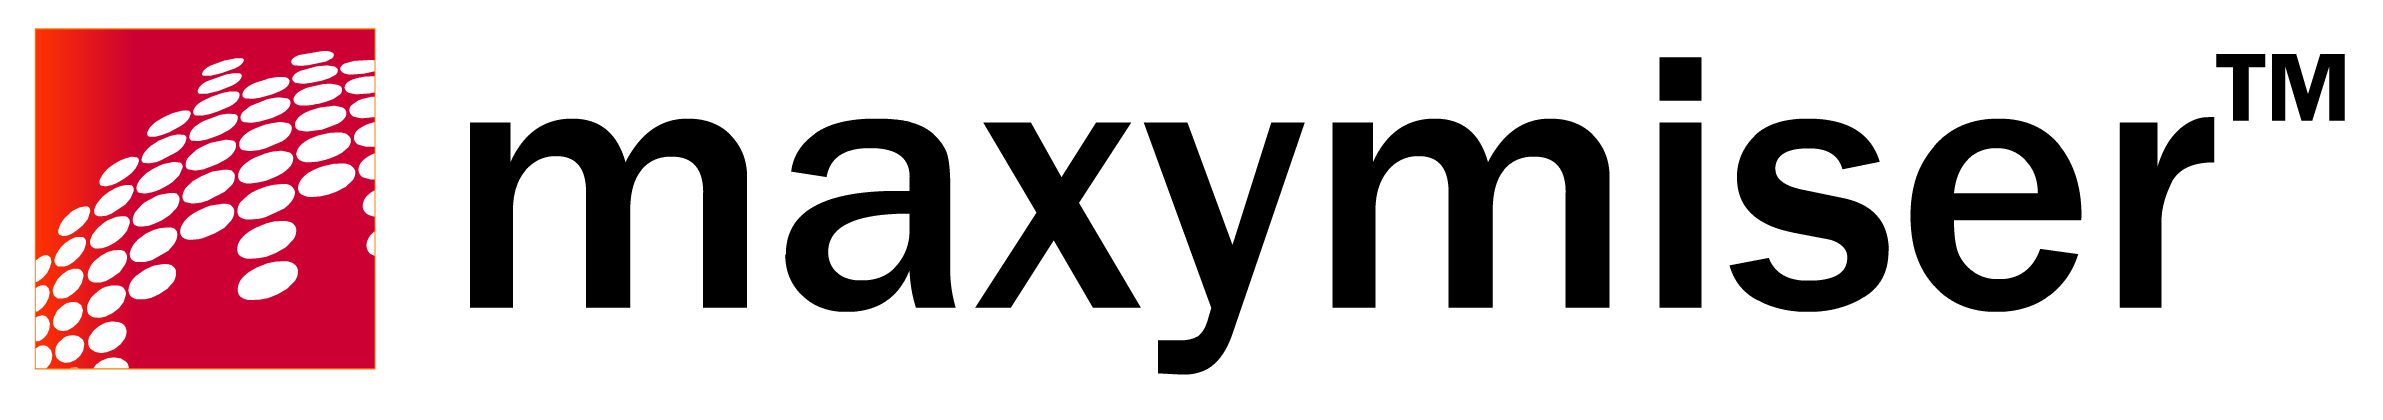 maxymiser logo